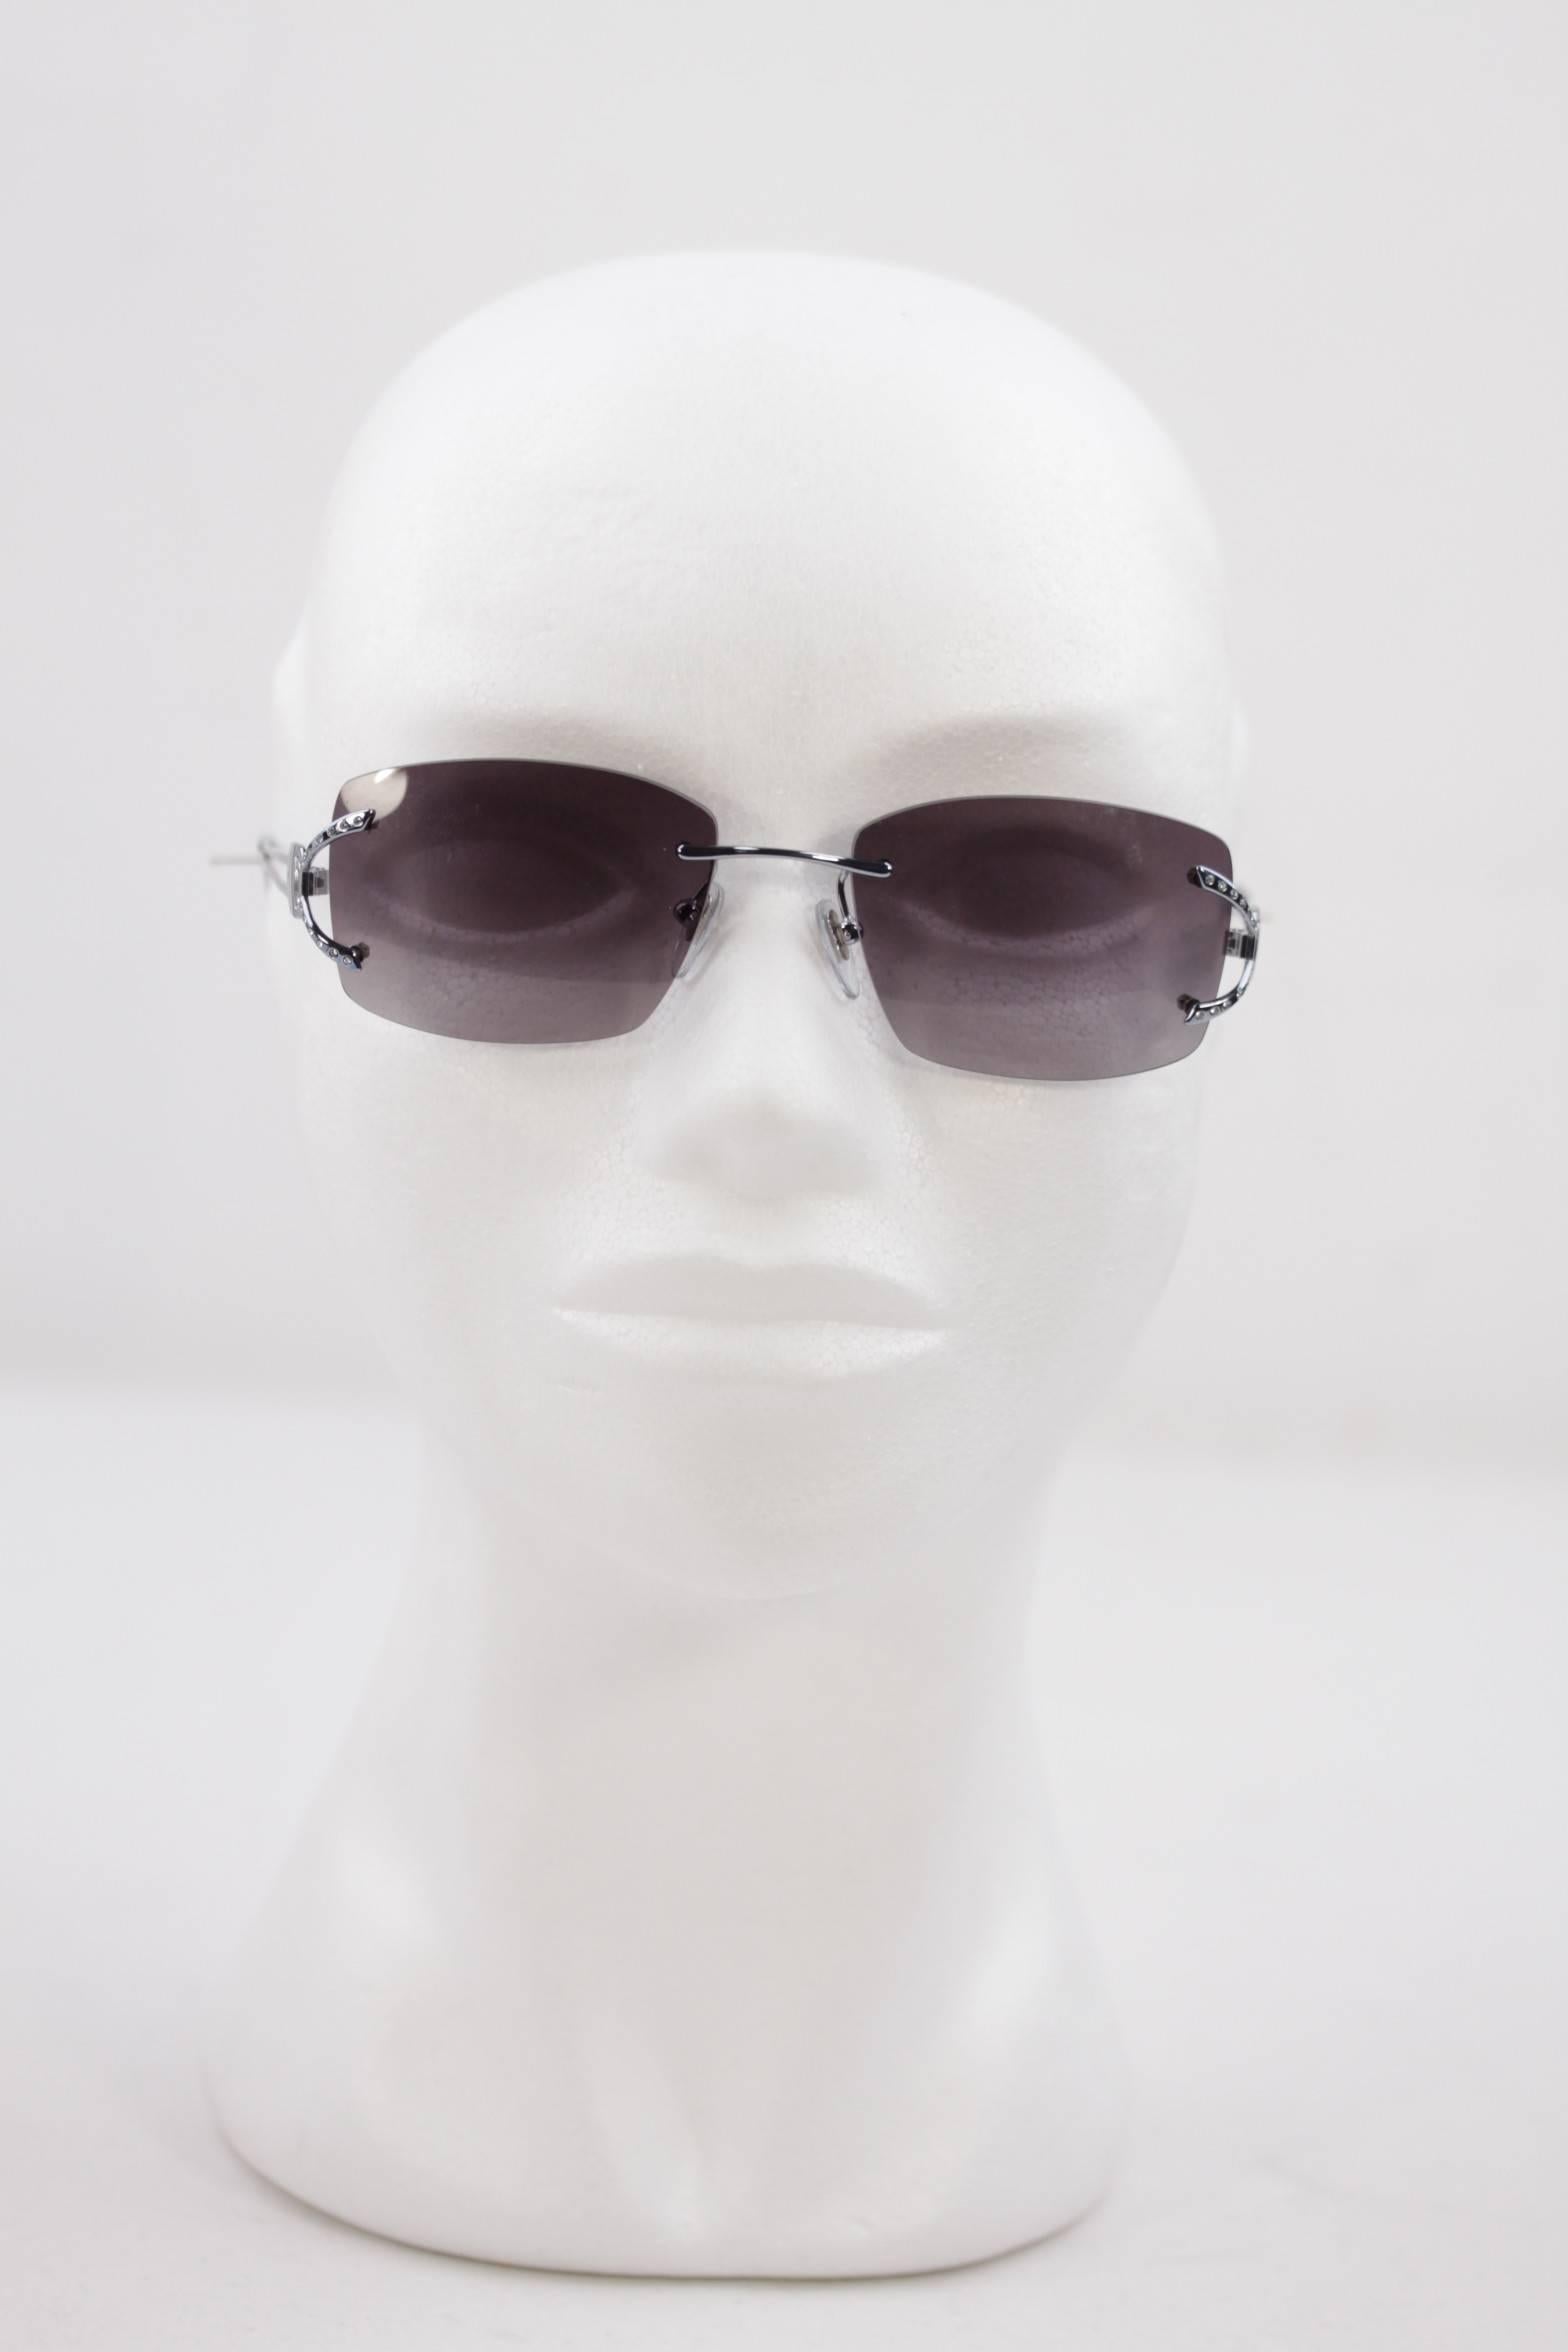 Gray SALVATORE FERRAGAMO sunglasses silver/blue eyewear 1648-B 545 53/16 135